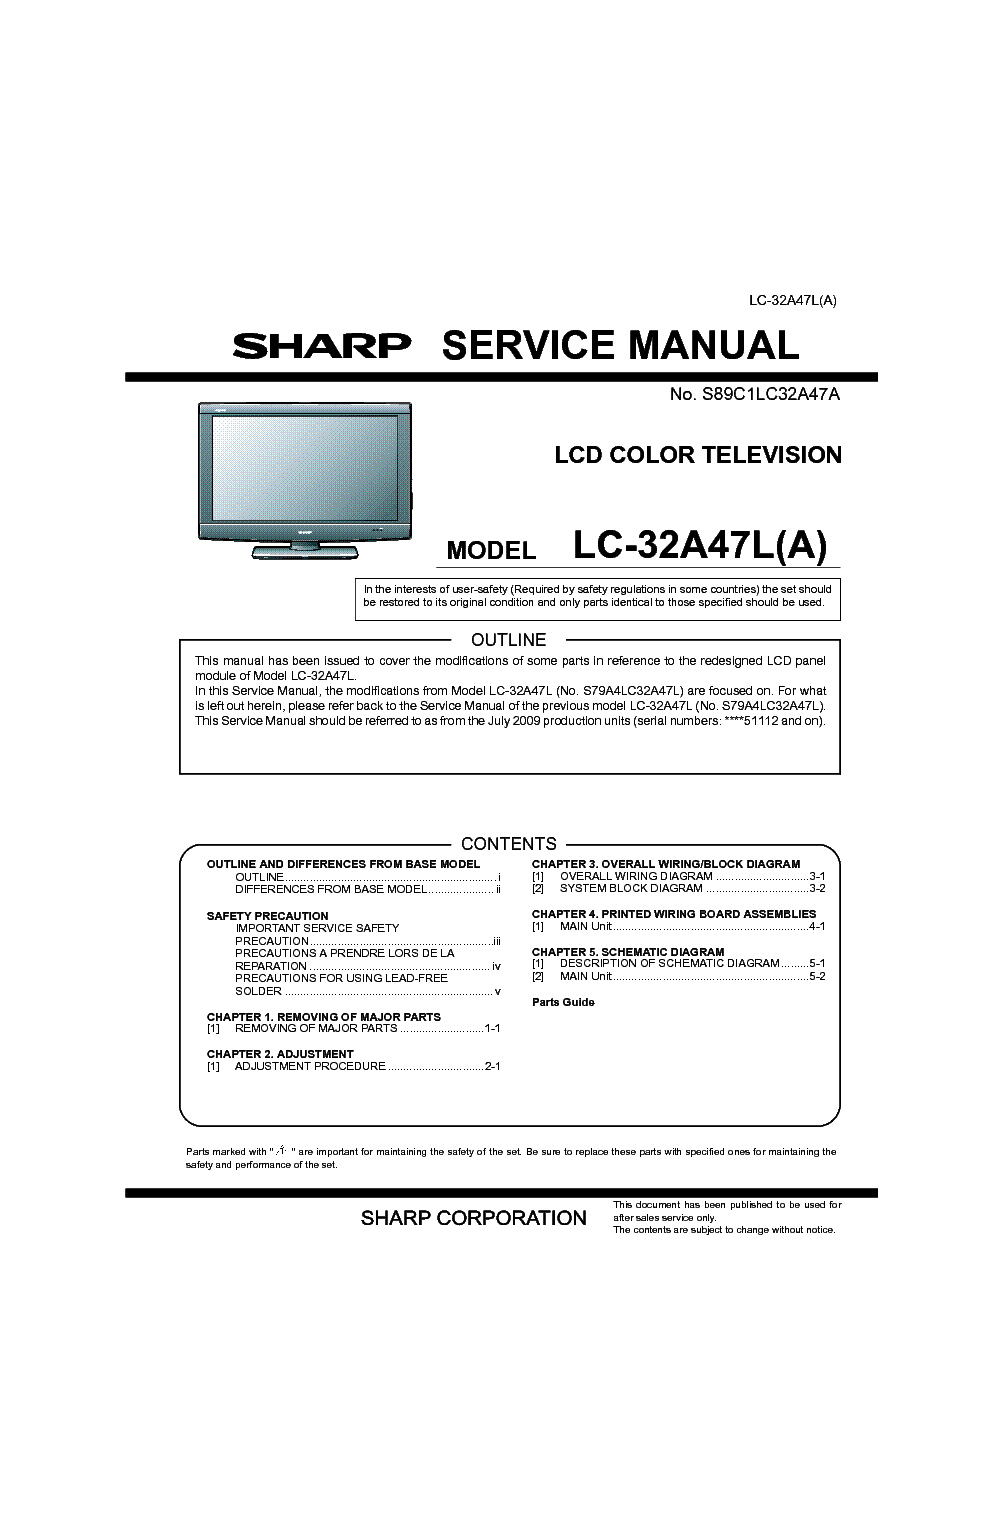 SHARP LC-32A47L-A SM service manual (1st page)